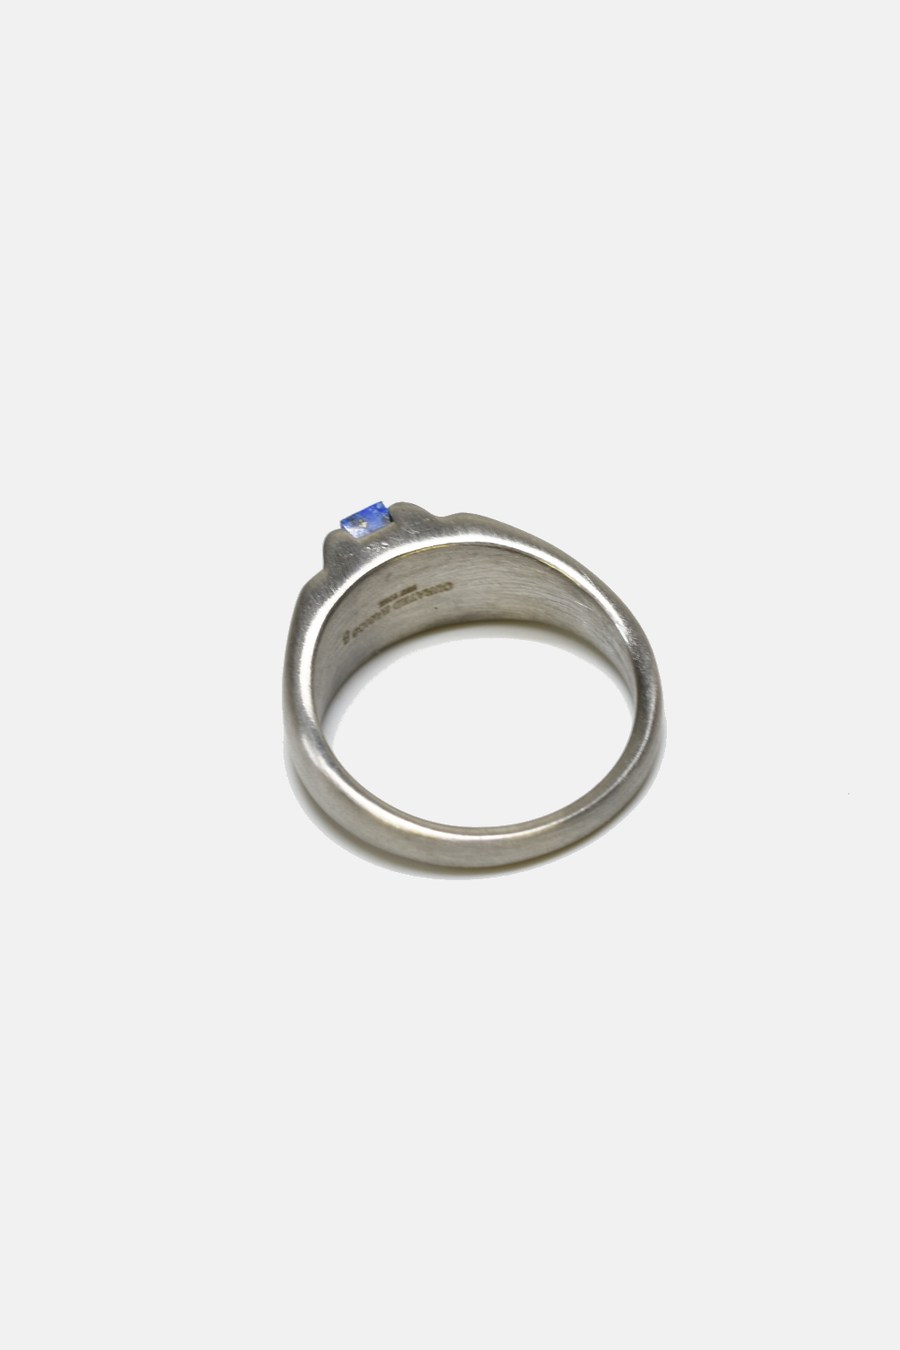 Lapis Lazuli Inlay Ring: 10